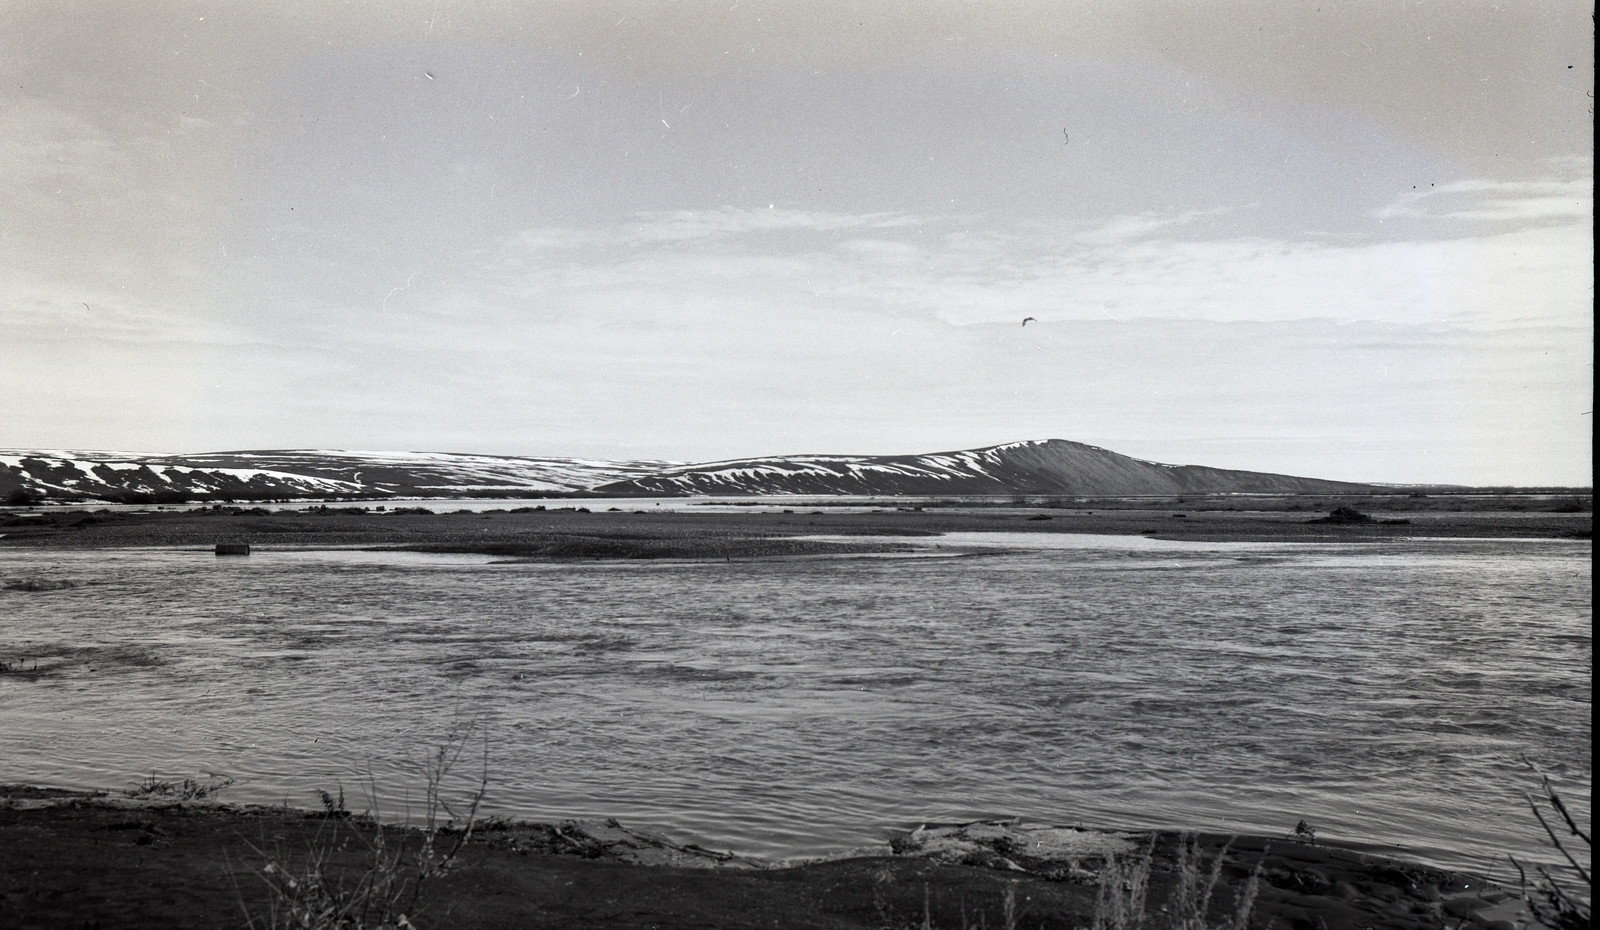 Arctic Research Station, Point Barrow, Alaska, 1948, Landscapes | Flickr